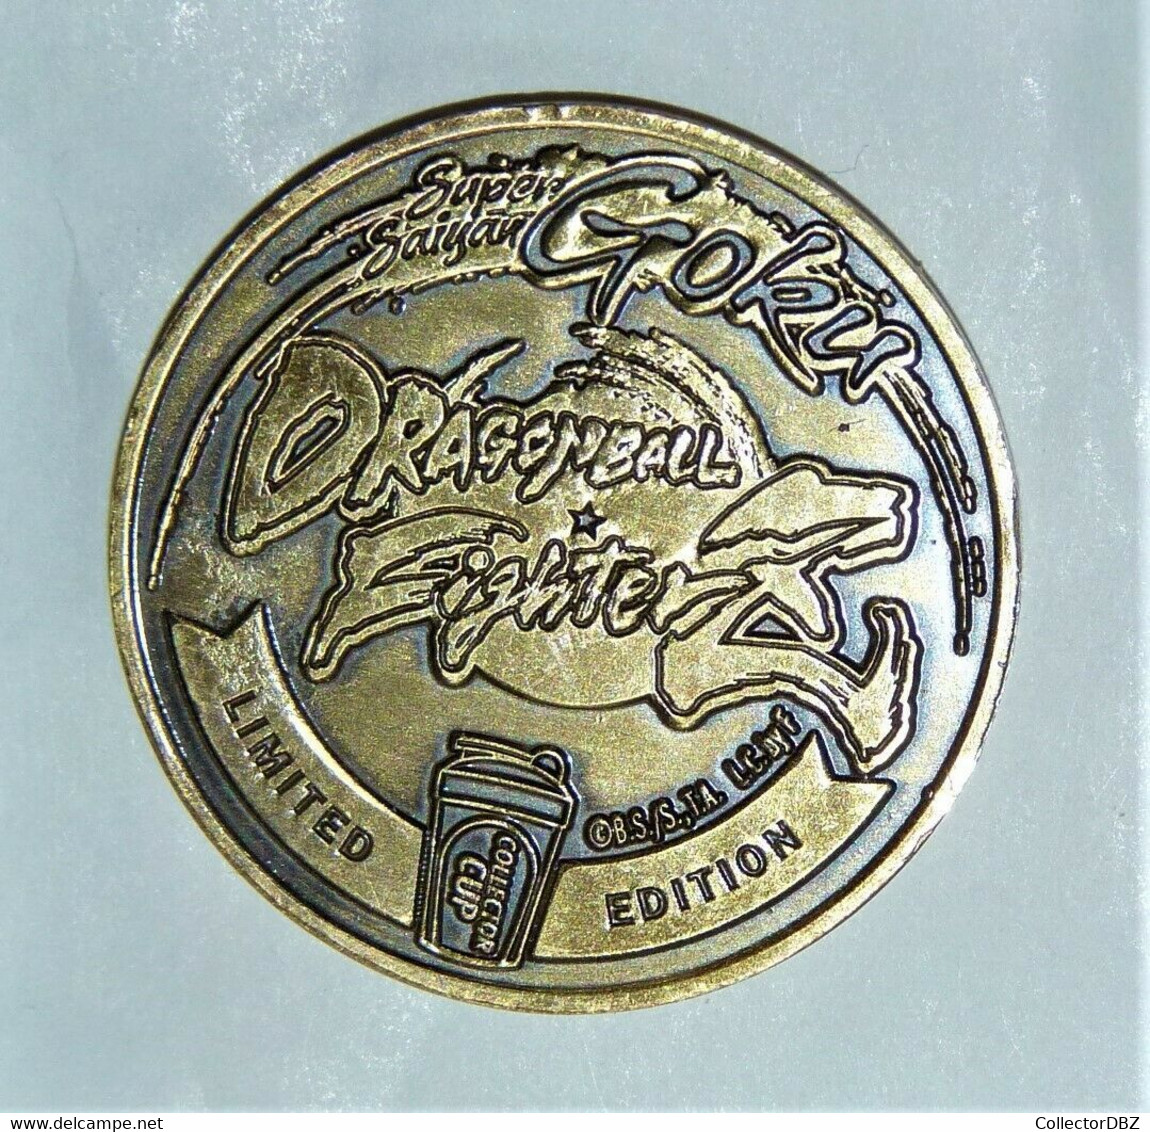 Dragon Ball Z Goku Cup Édition Limité Limited Collector Coin Pièce Officiel Neuf